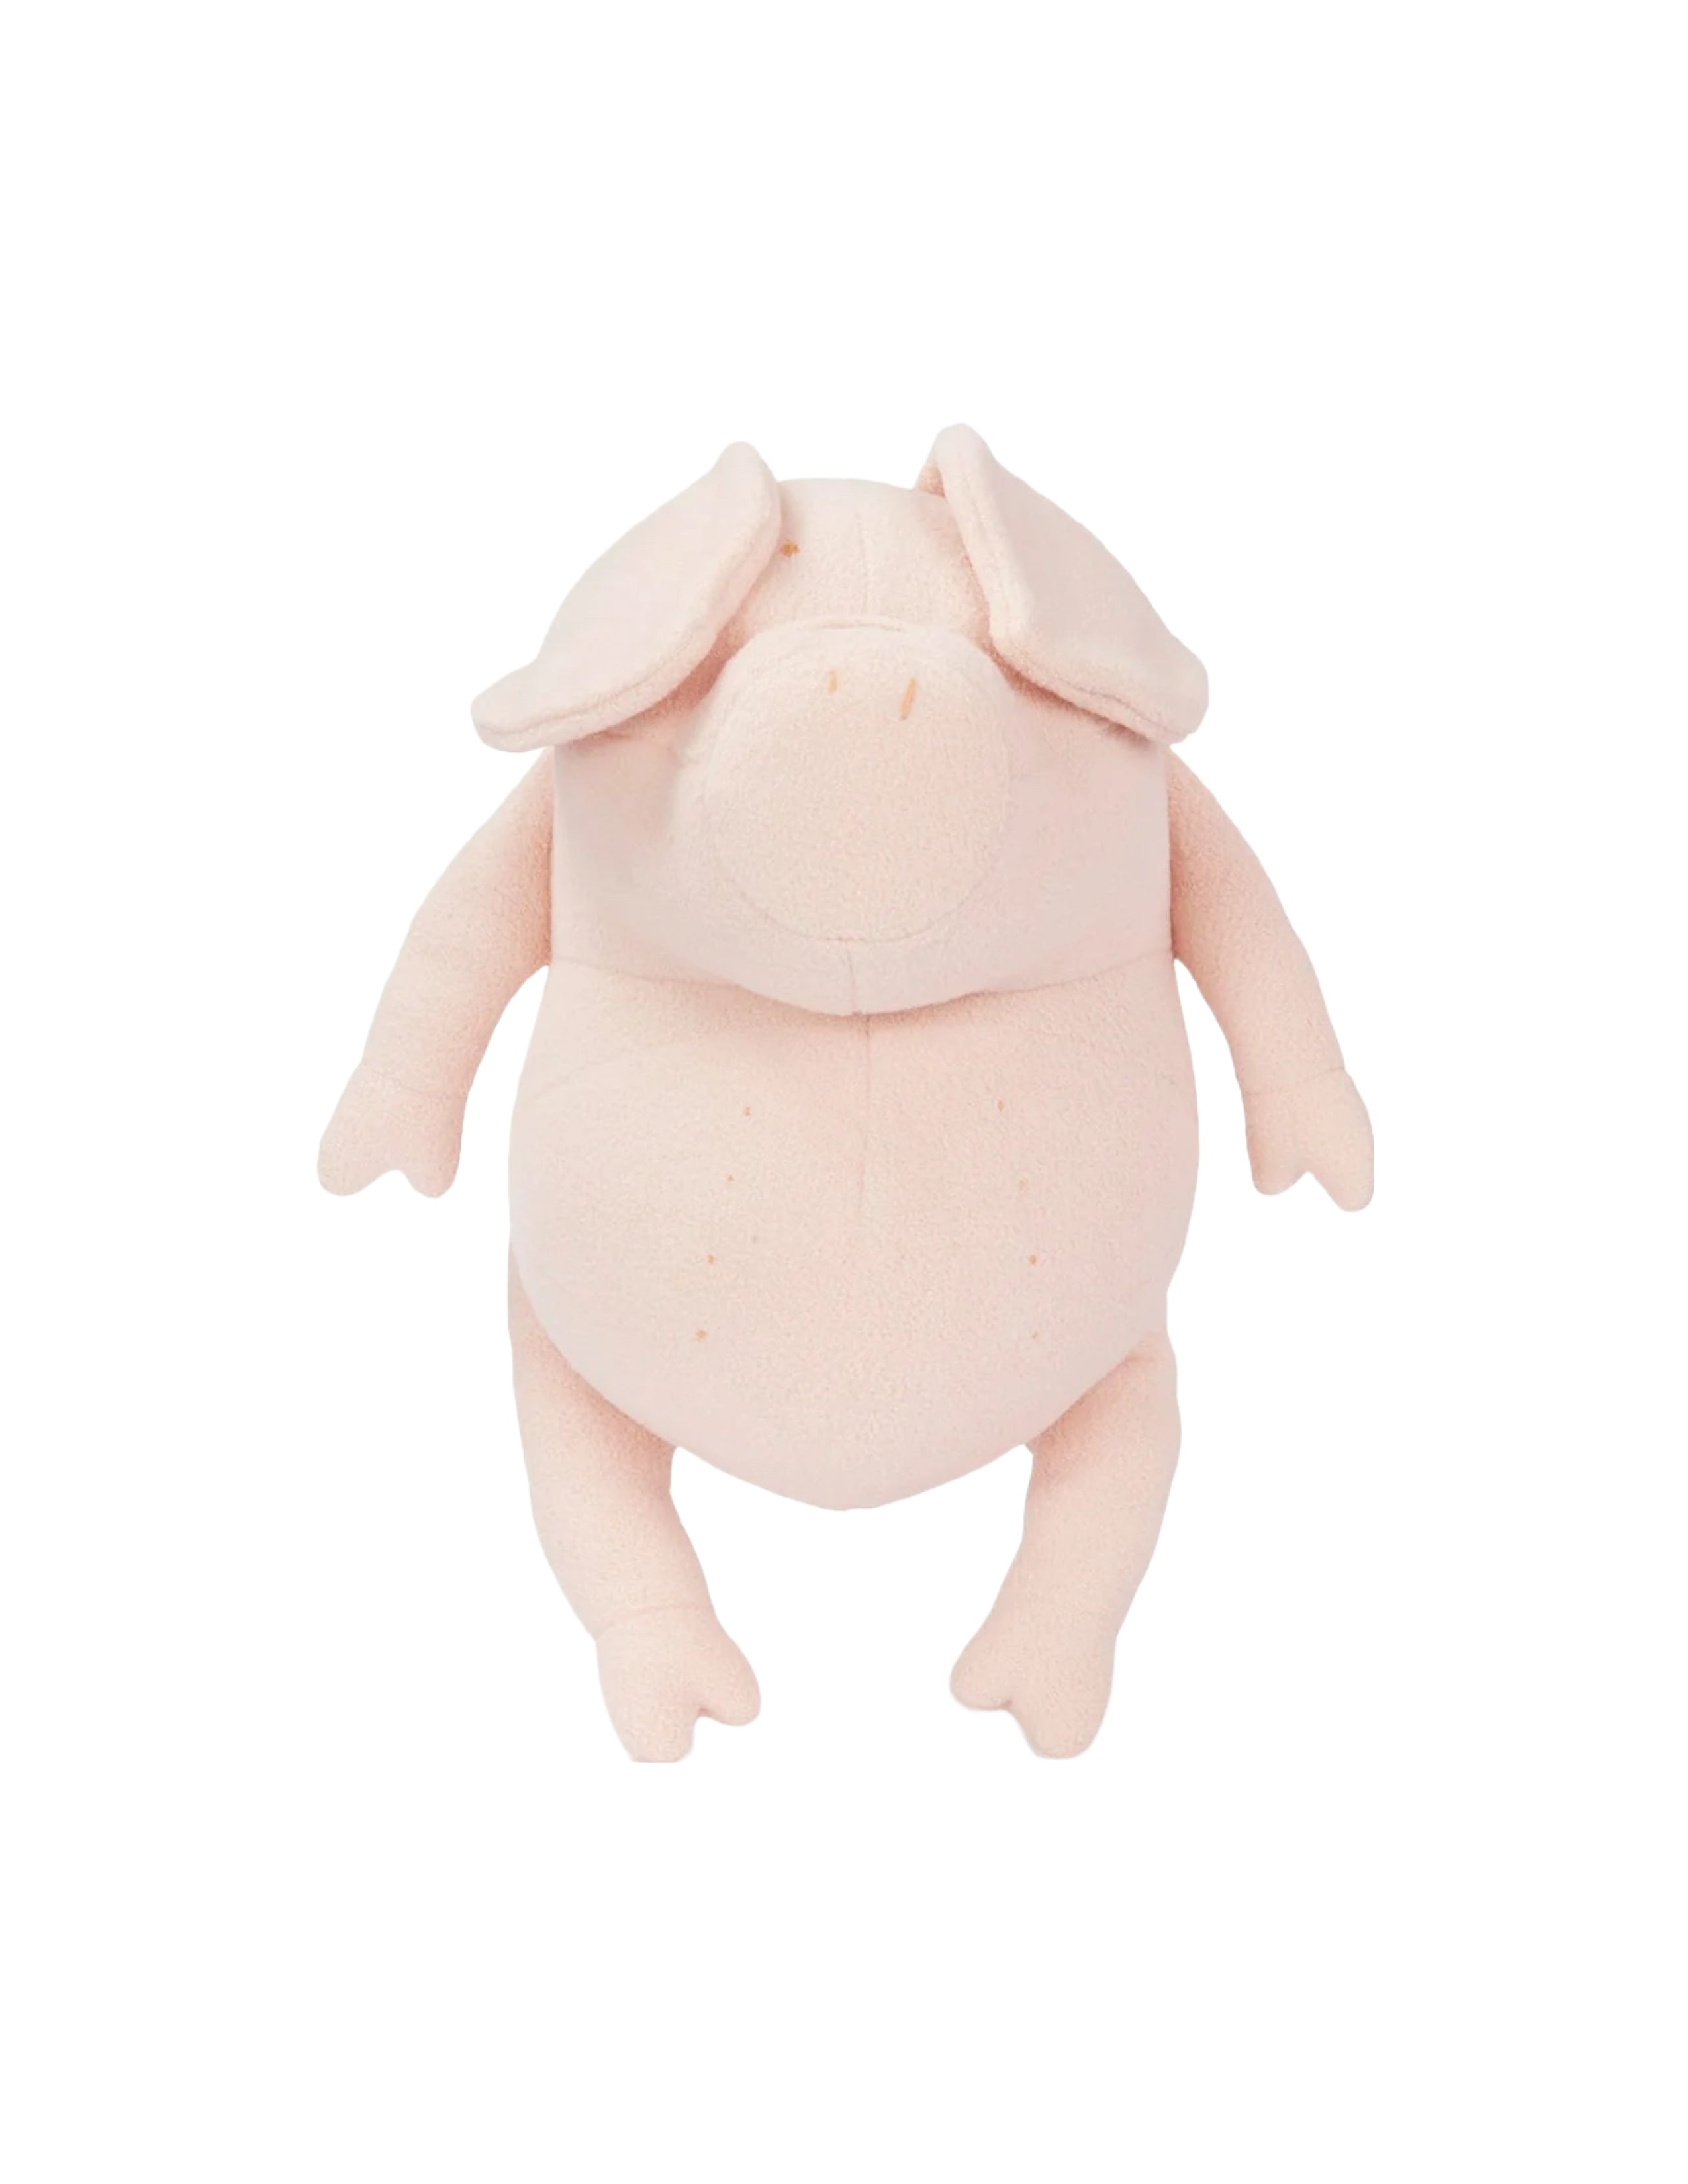 Helmut the Pig